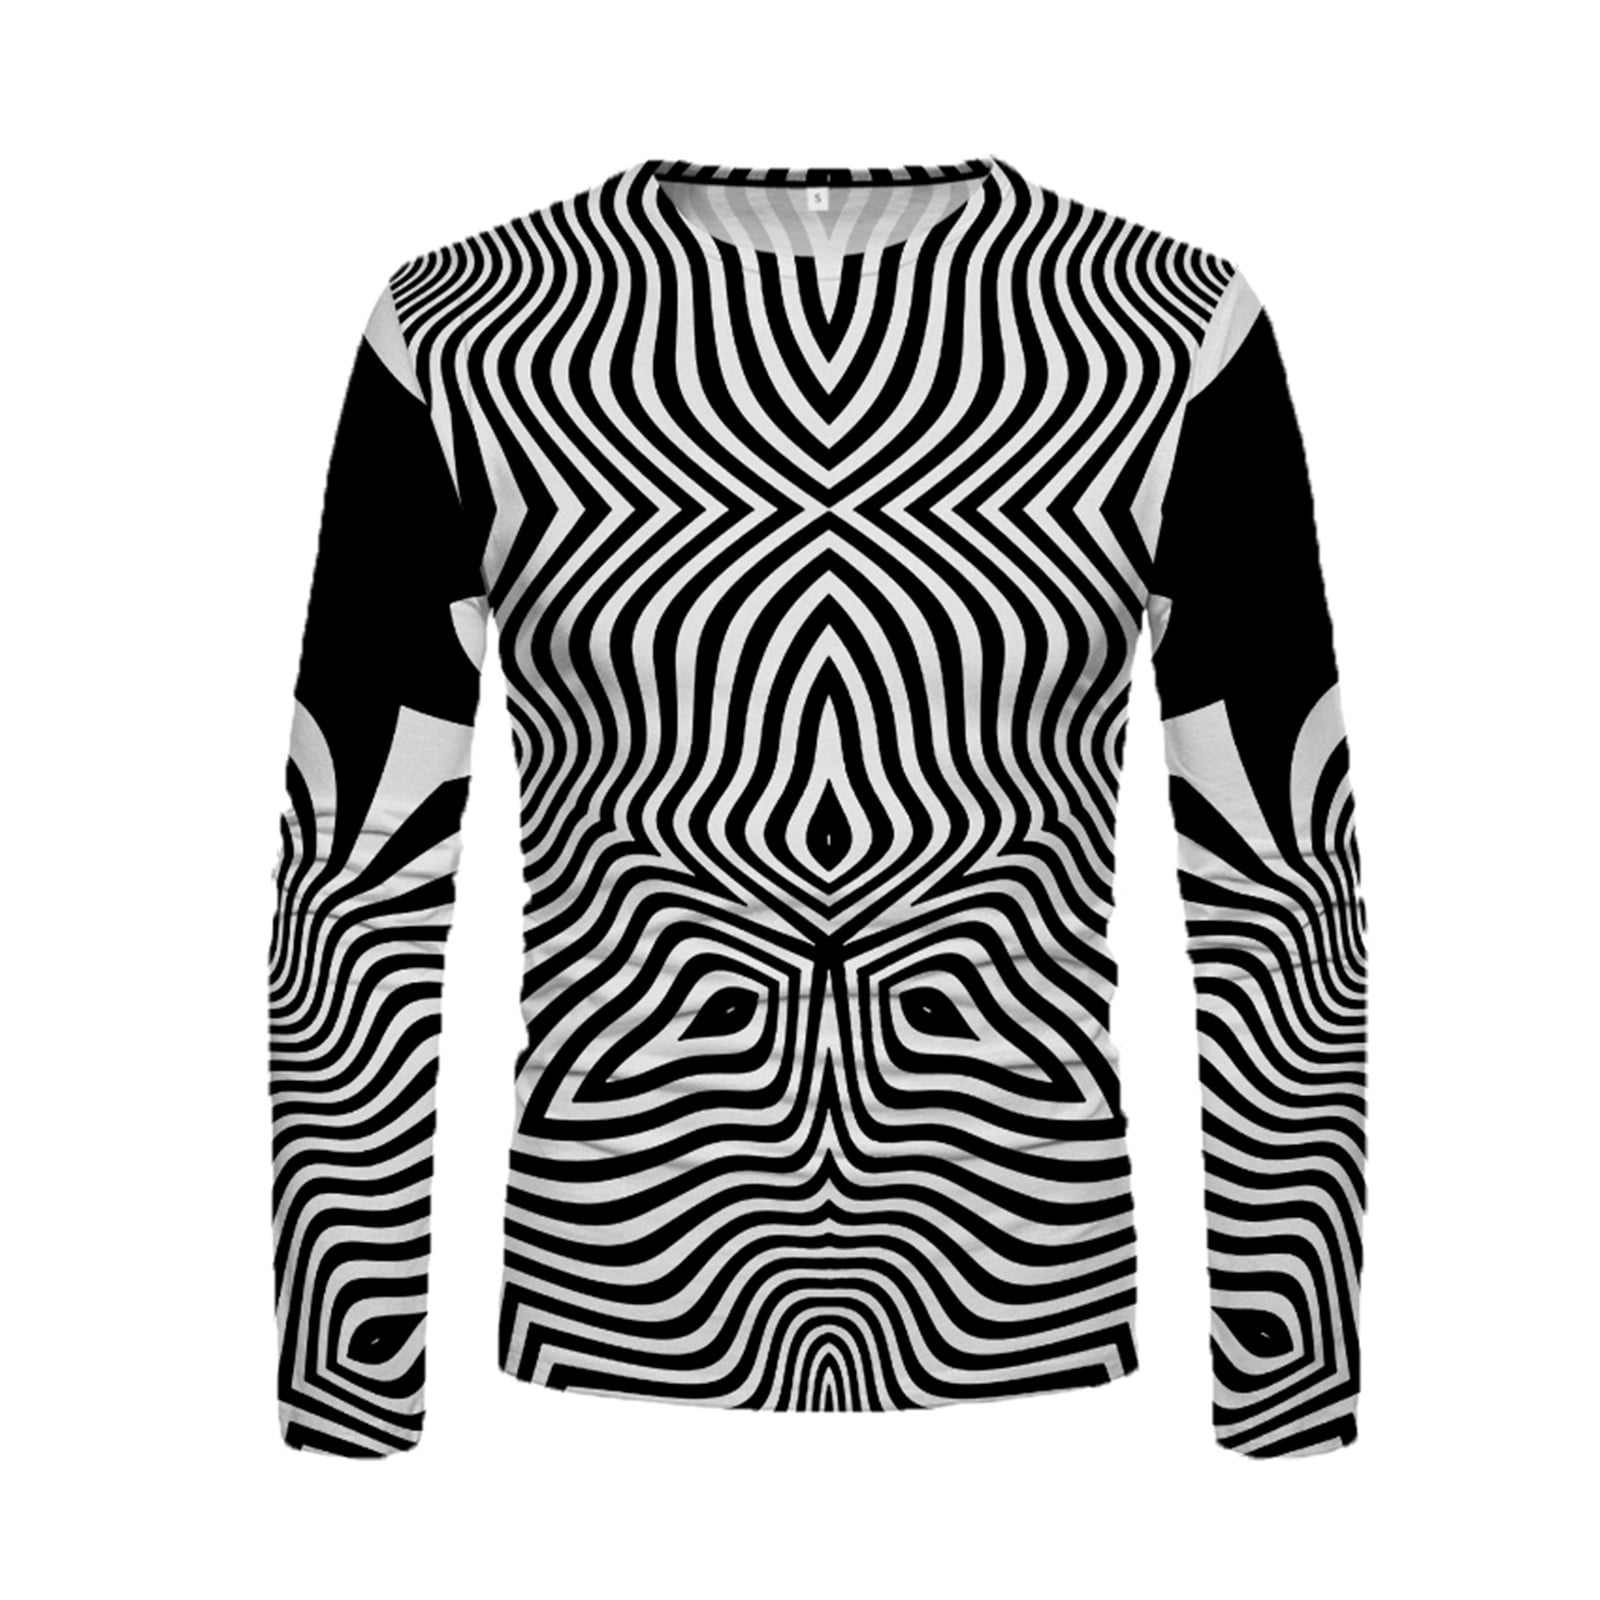 Black to White Gradient White Graphic T-Shirt | Redbubble